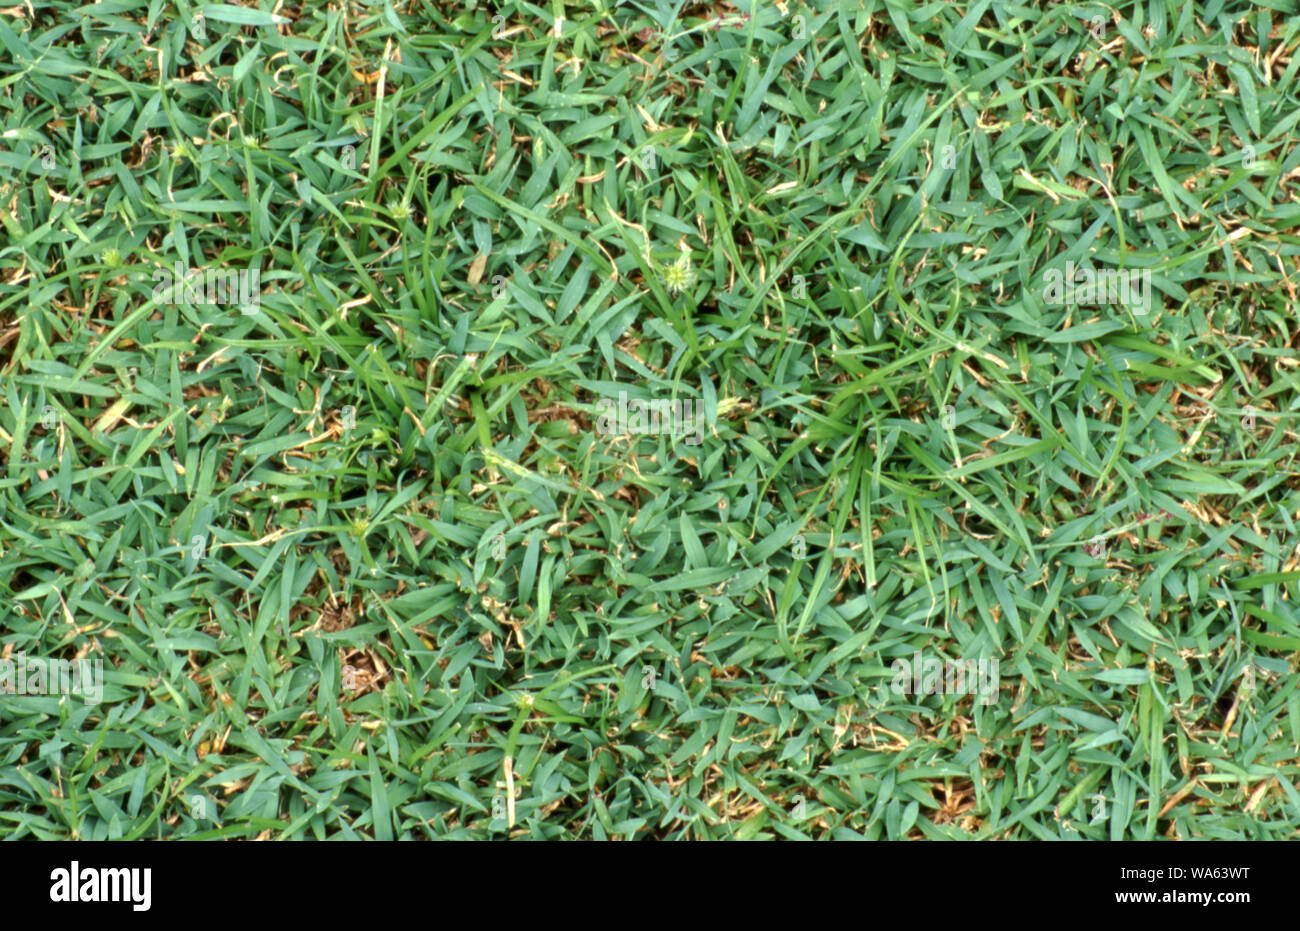 CLOSE UP OF MULLUMBIMBY COUCH (CYPERUS BREVIFOLIUS) GRASS. Stock Photo